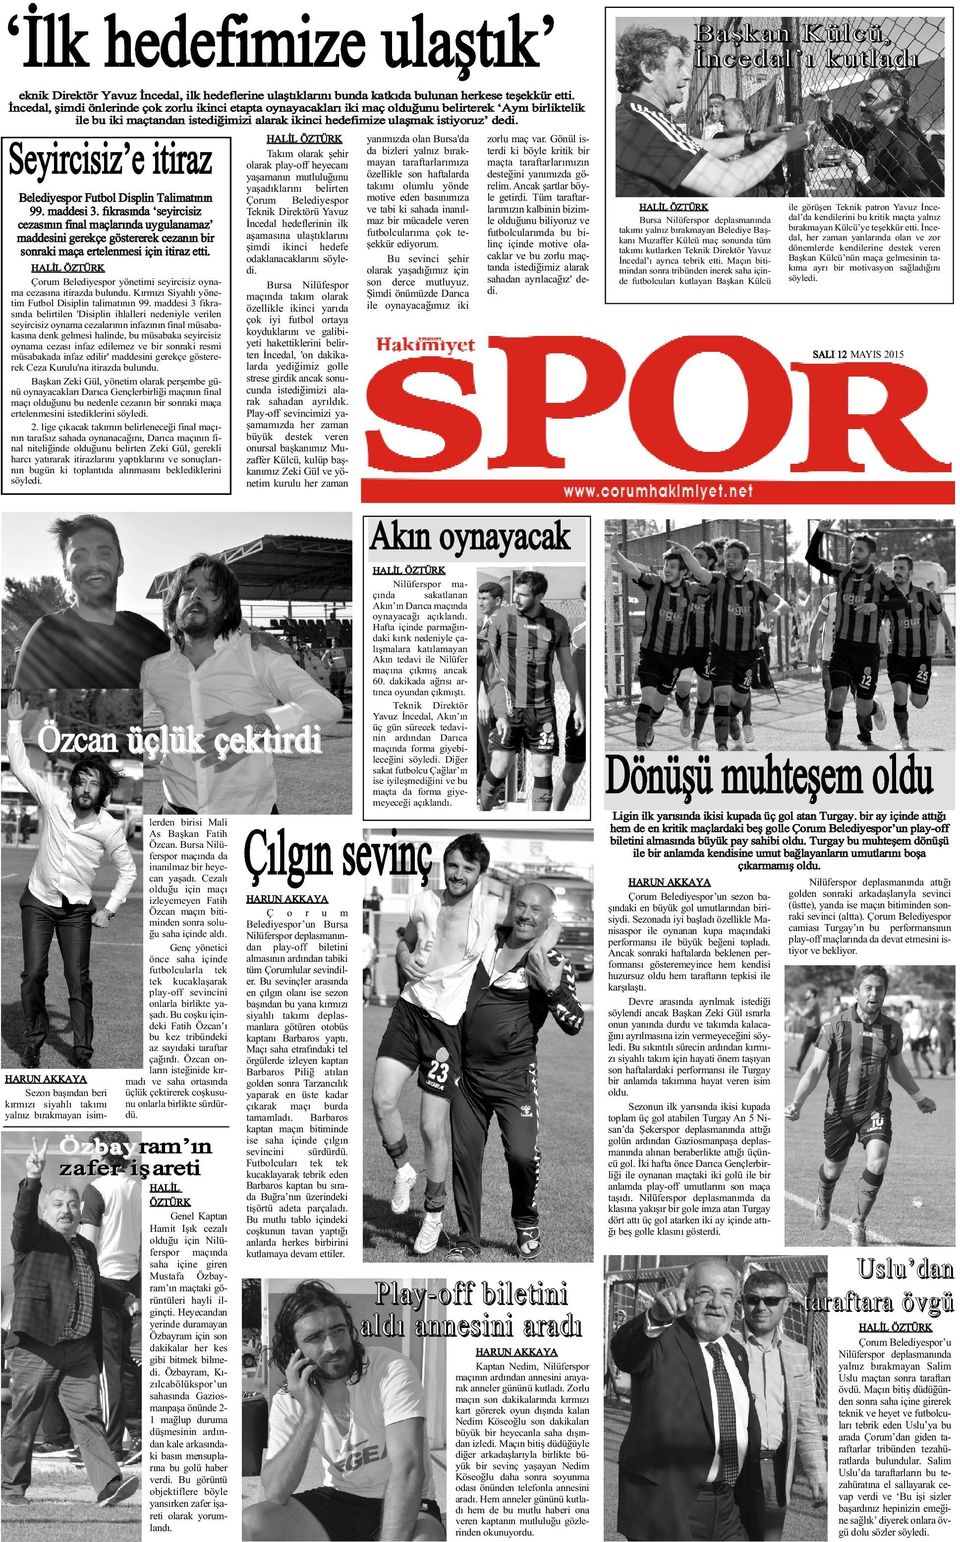 Seyircisiz e itiraz Belediyespor Futbol Displin Talimatýnýn 99. maddesi 3.